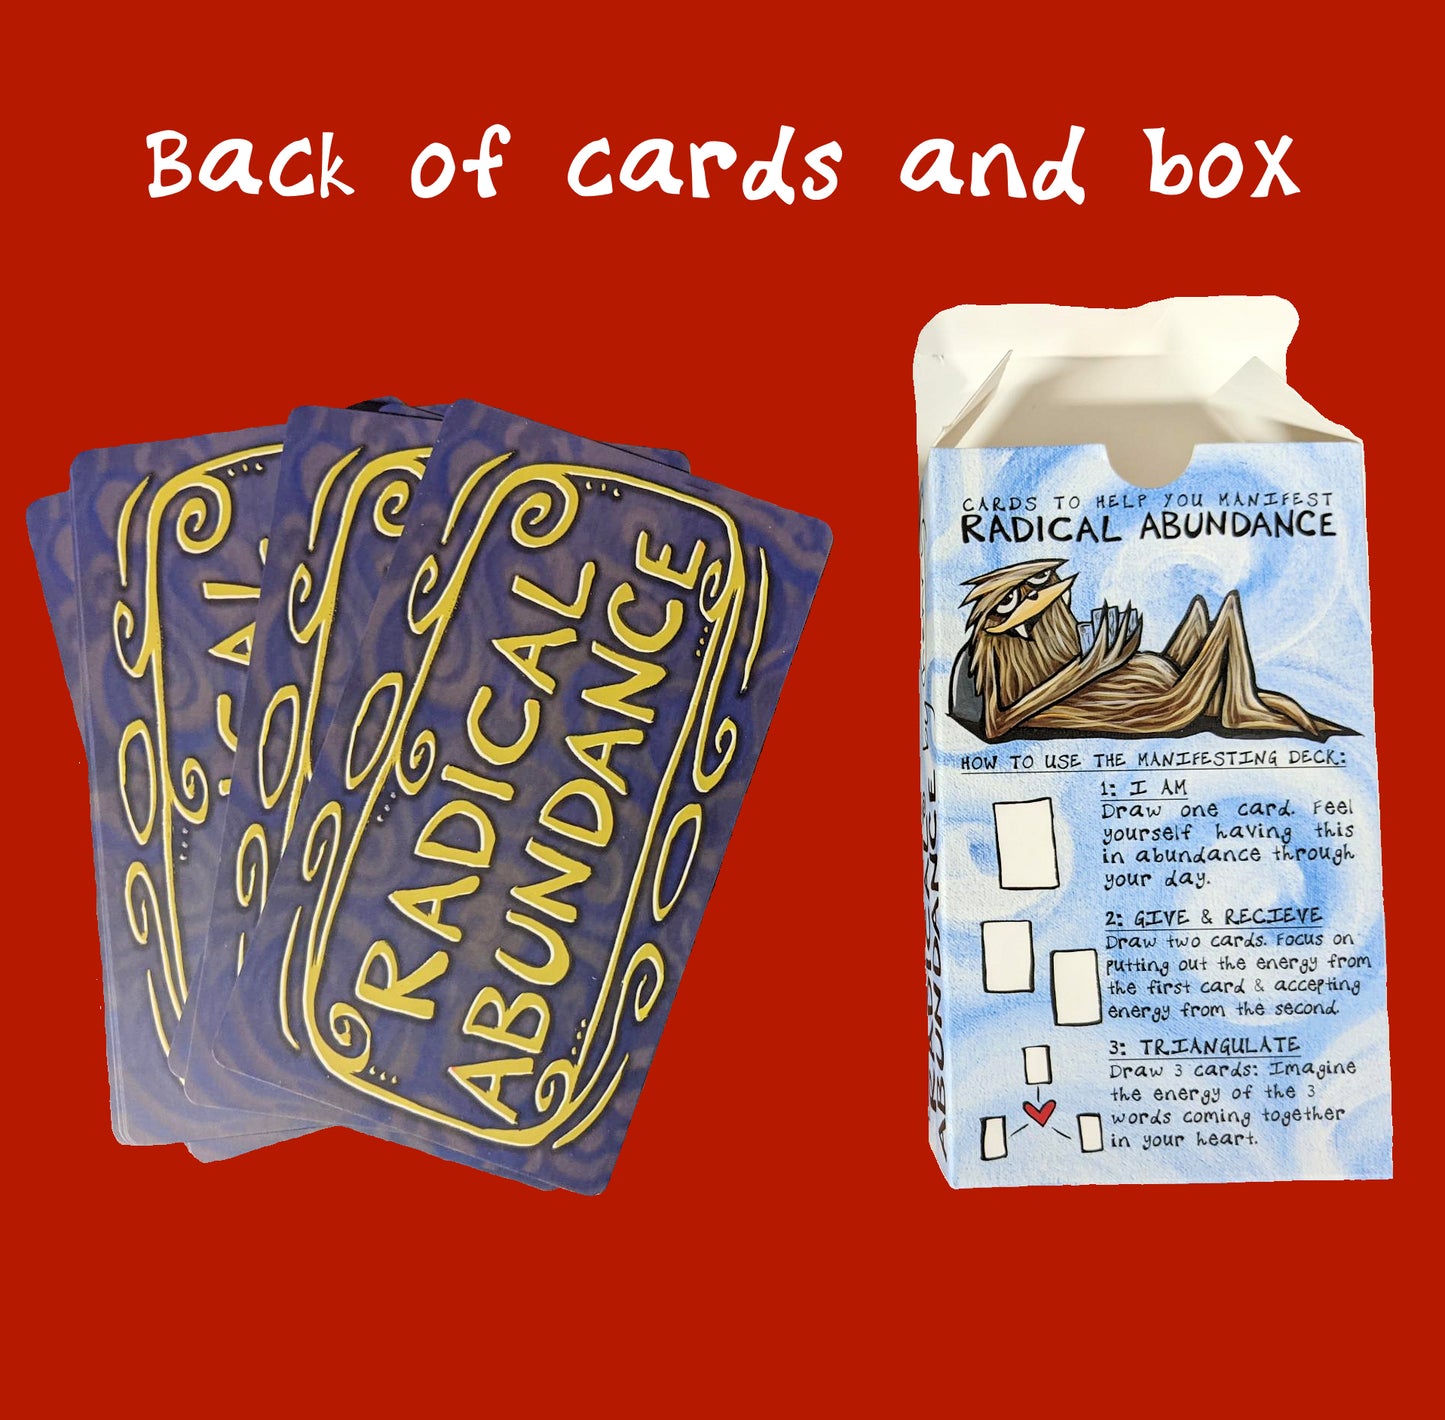 Radical Abundance "Manifestation" Cards